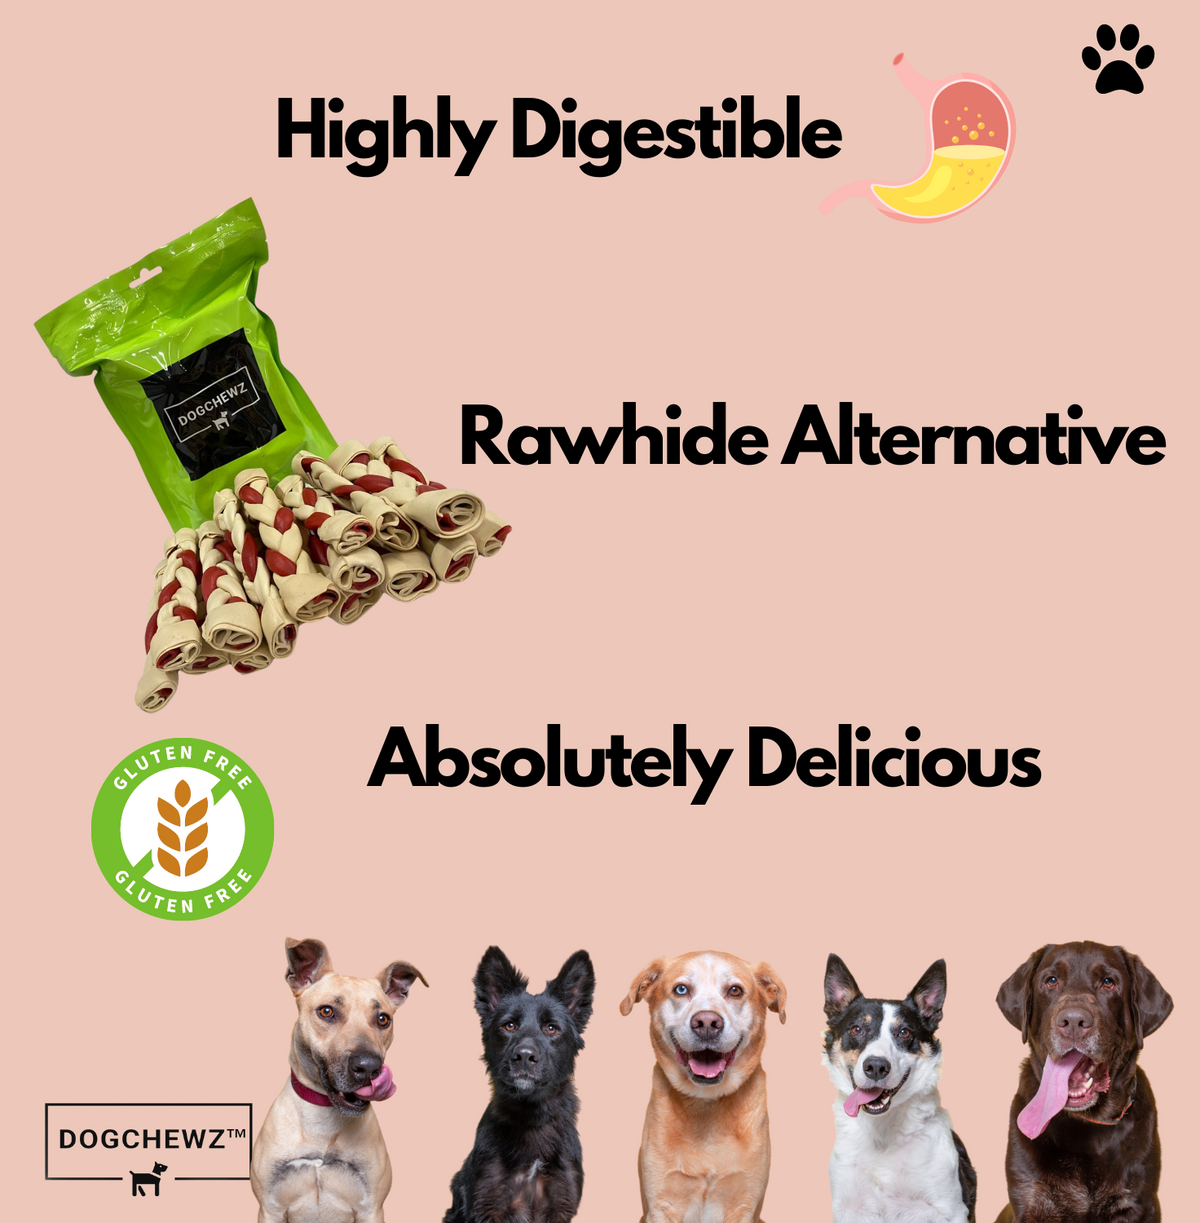 DOGCHEWZ™ Rawhide Free Braid Dog Chew Treats 5" (18 Ct/Bag) - Chicken Flavor